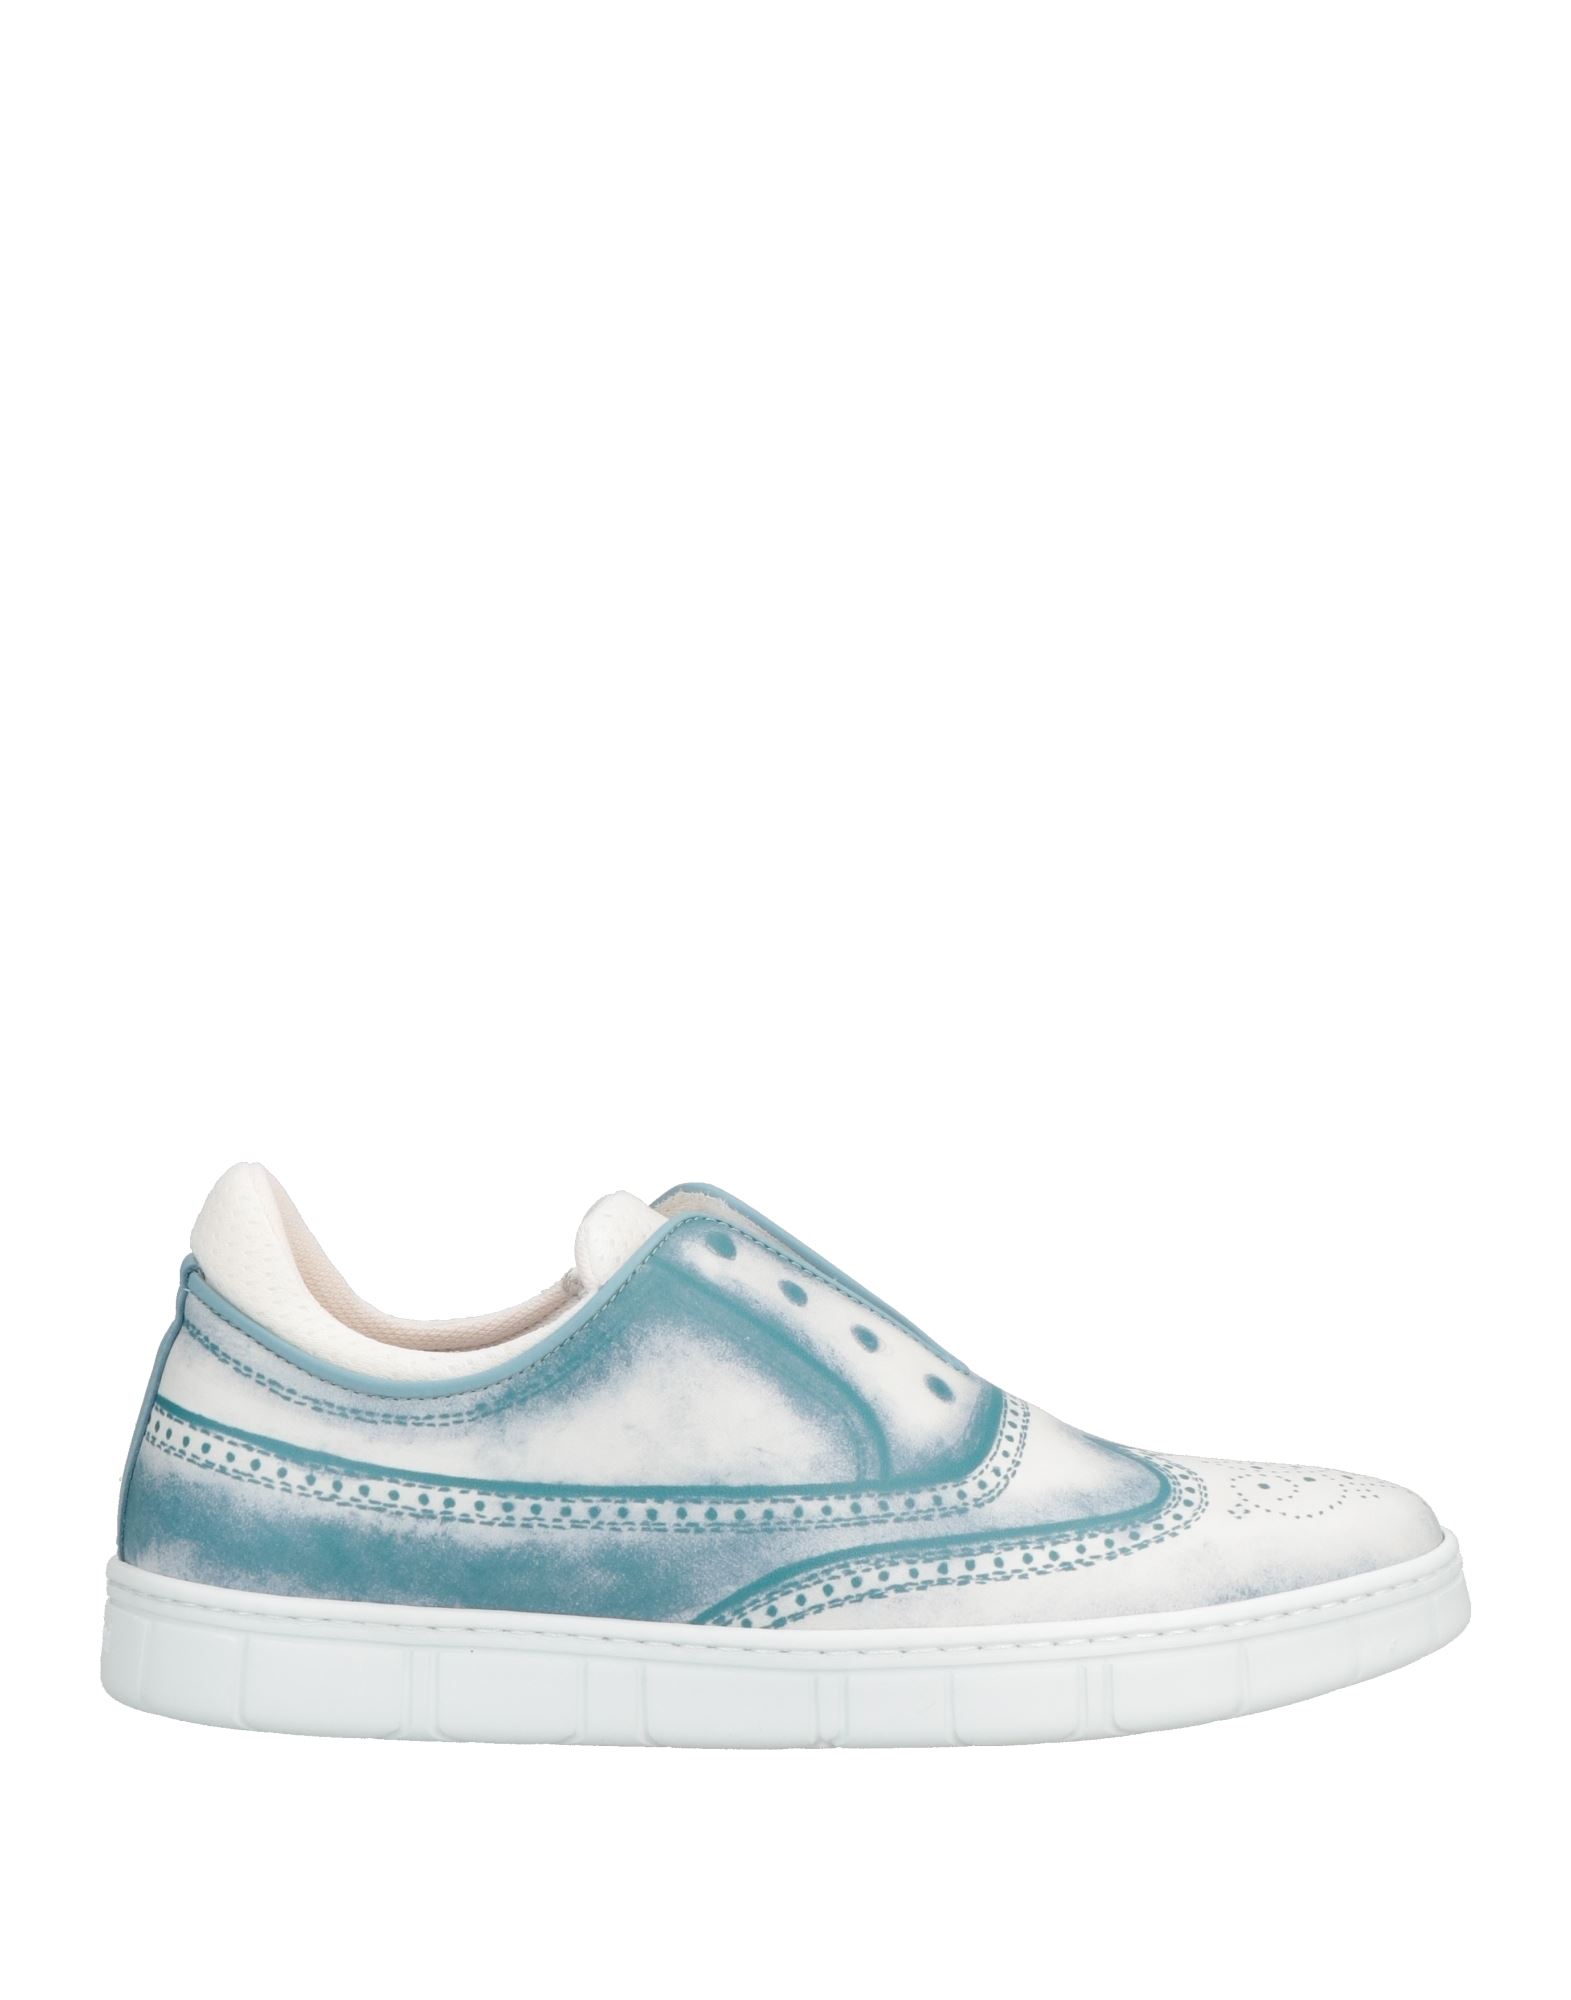 A.testoni Sneakers In Pastel Blue